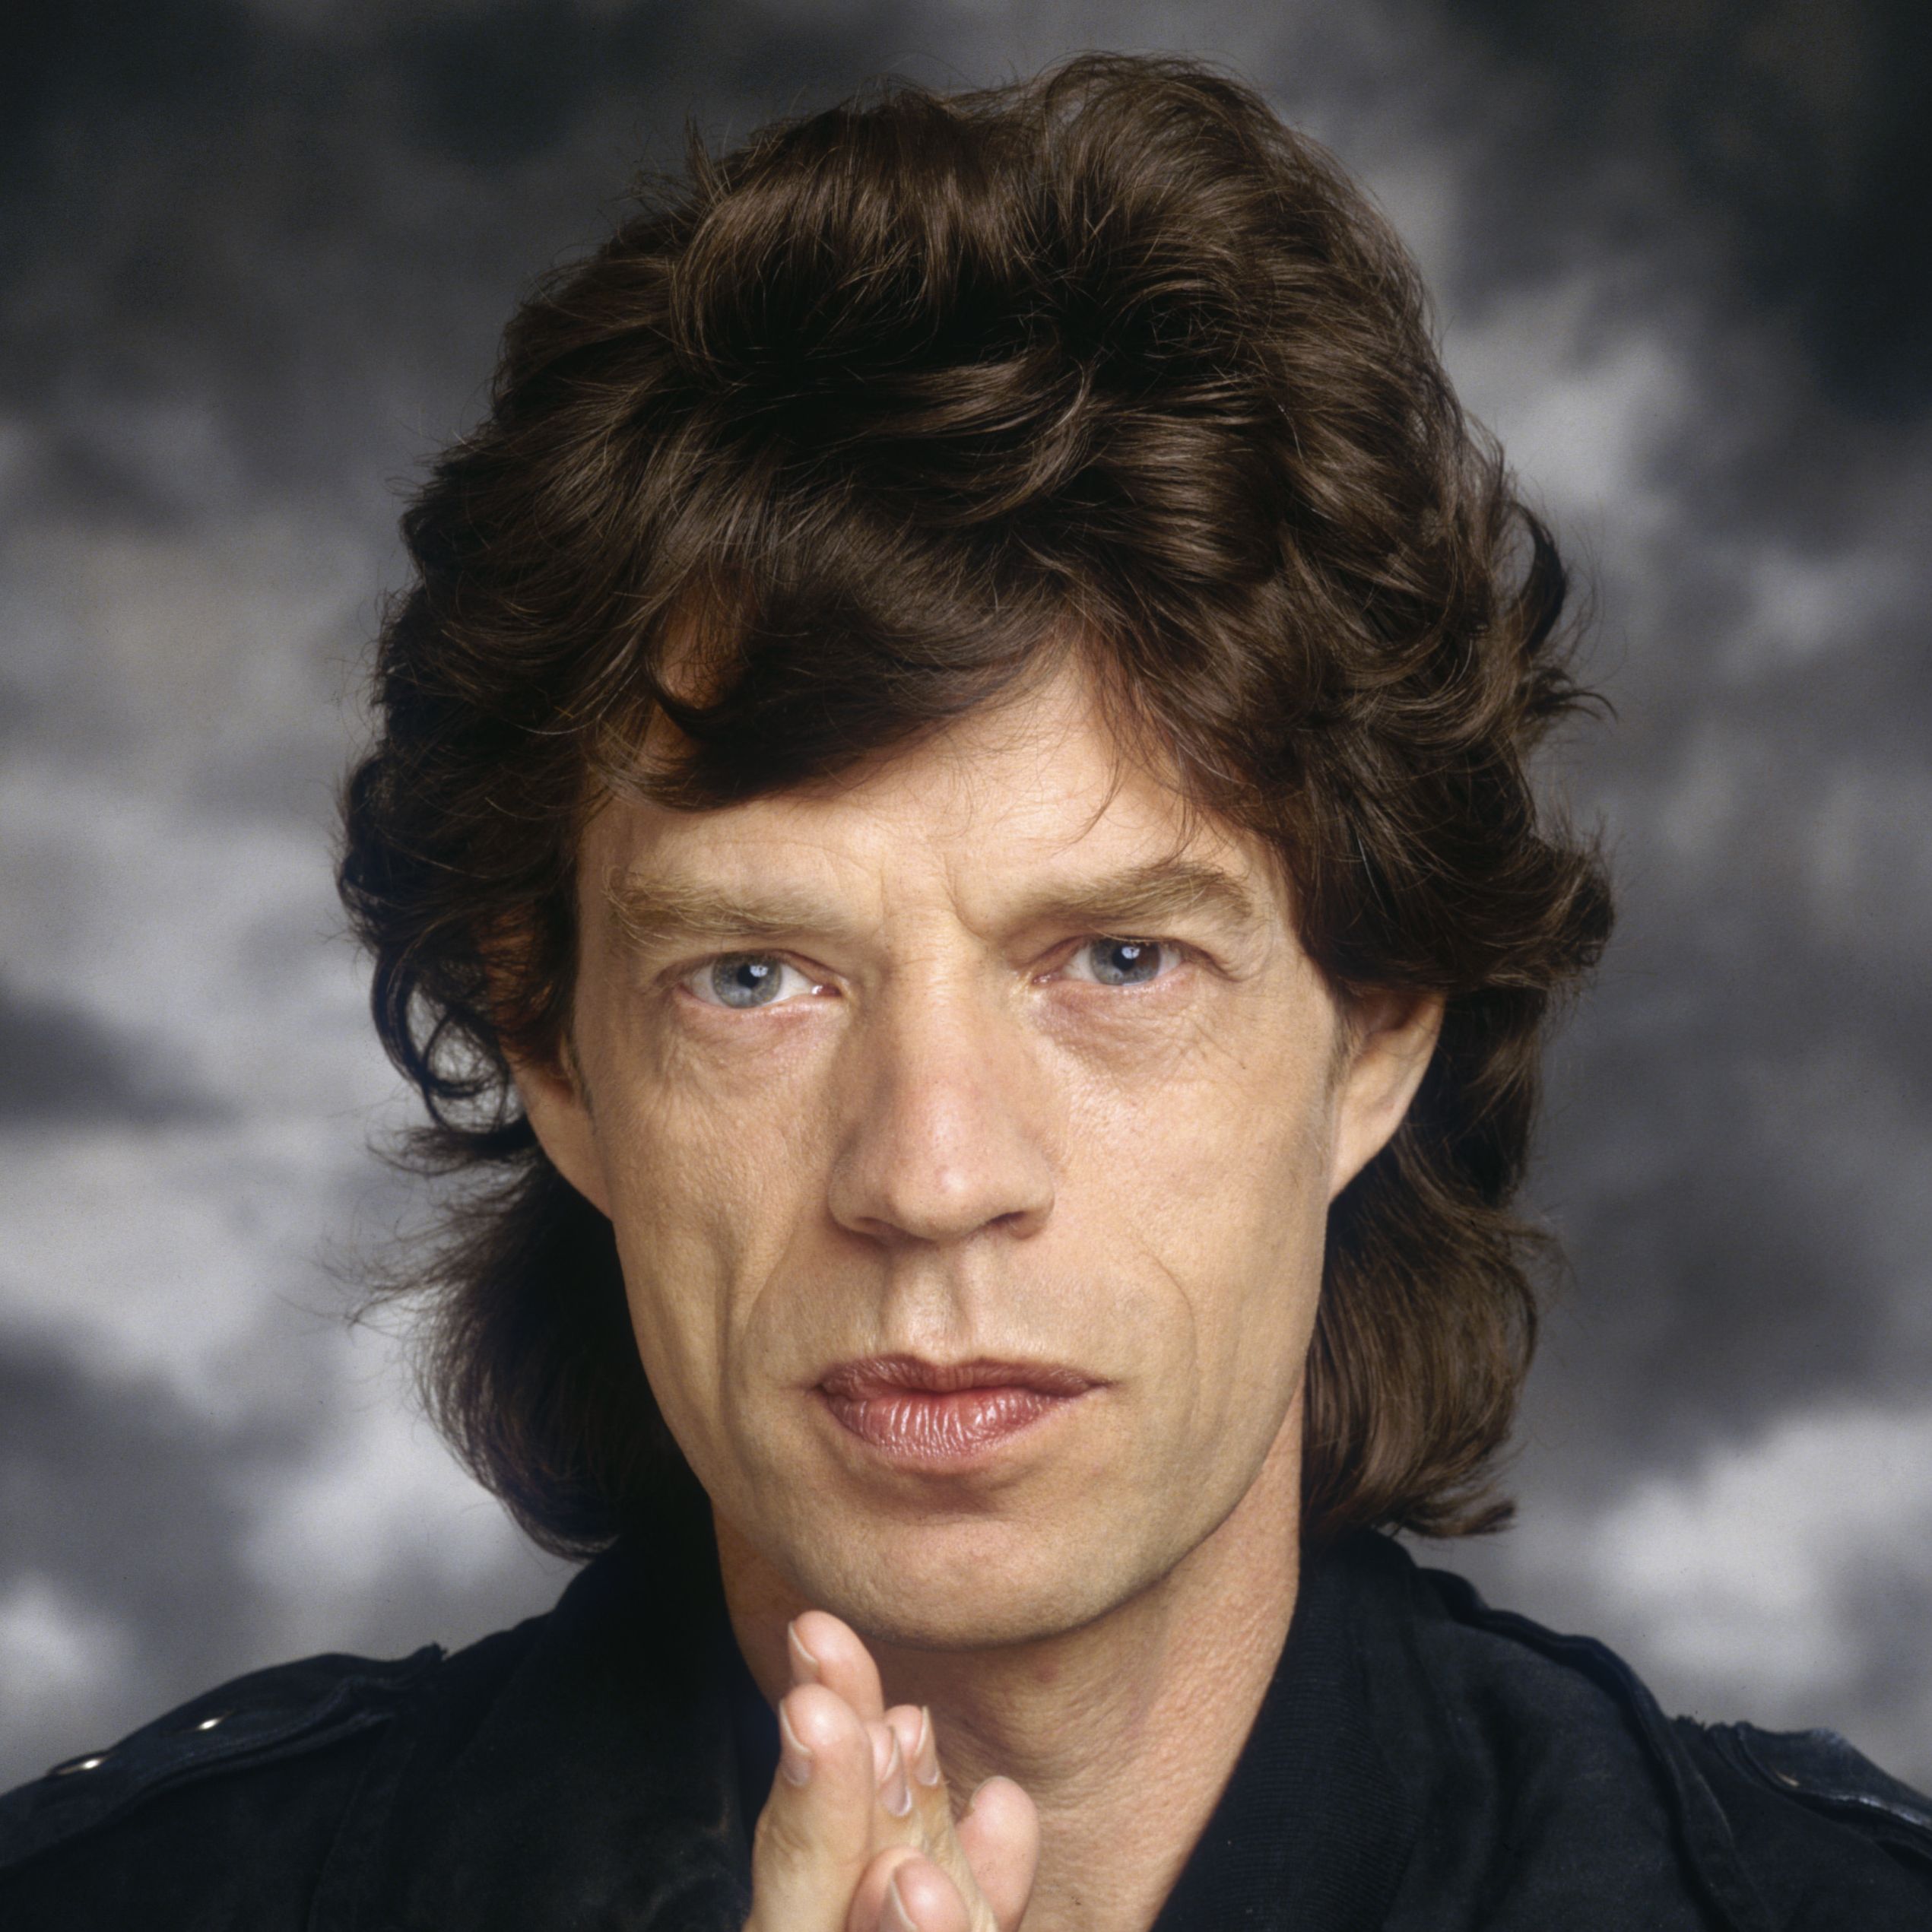 Mick Jagger: ROCK LEGENDS 1960s